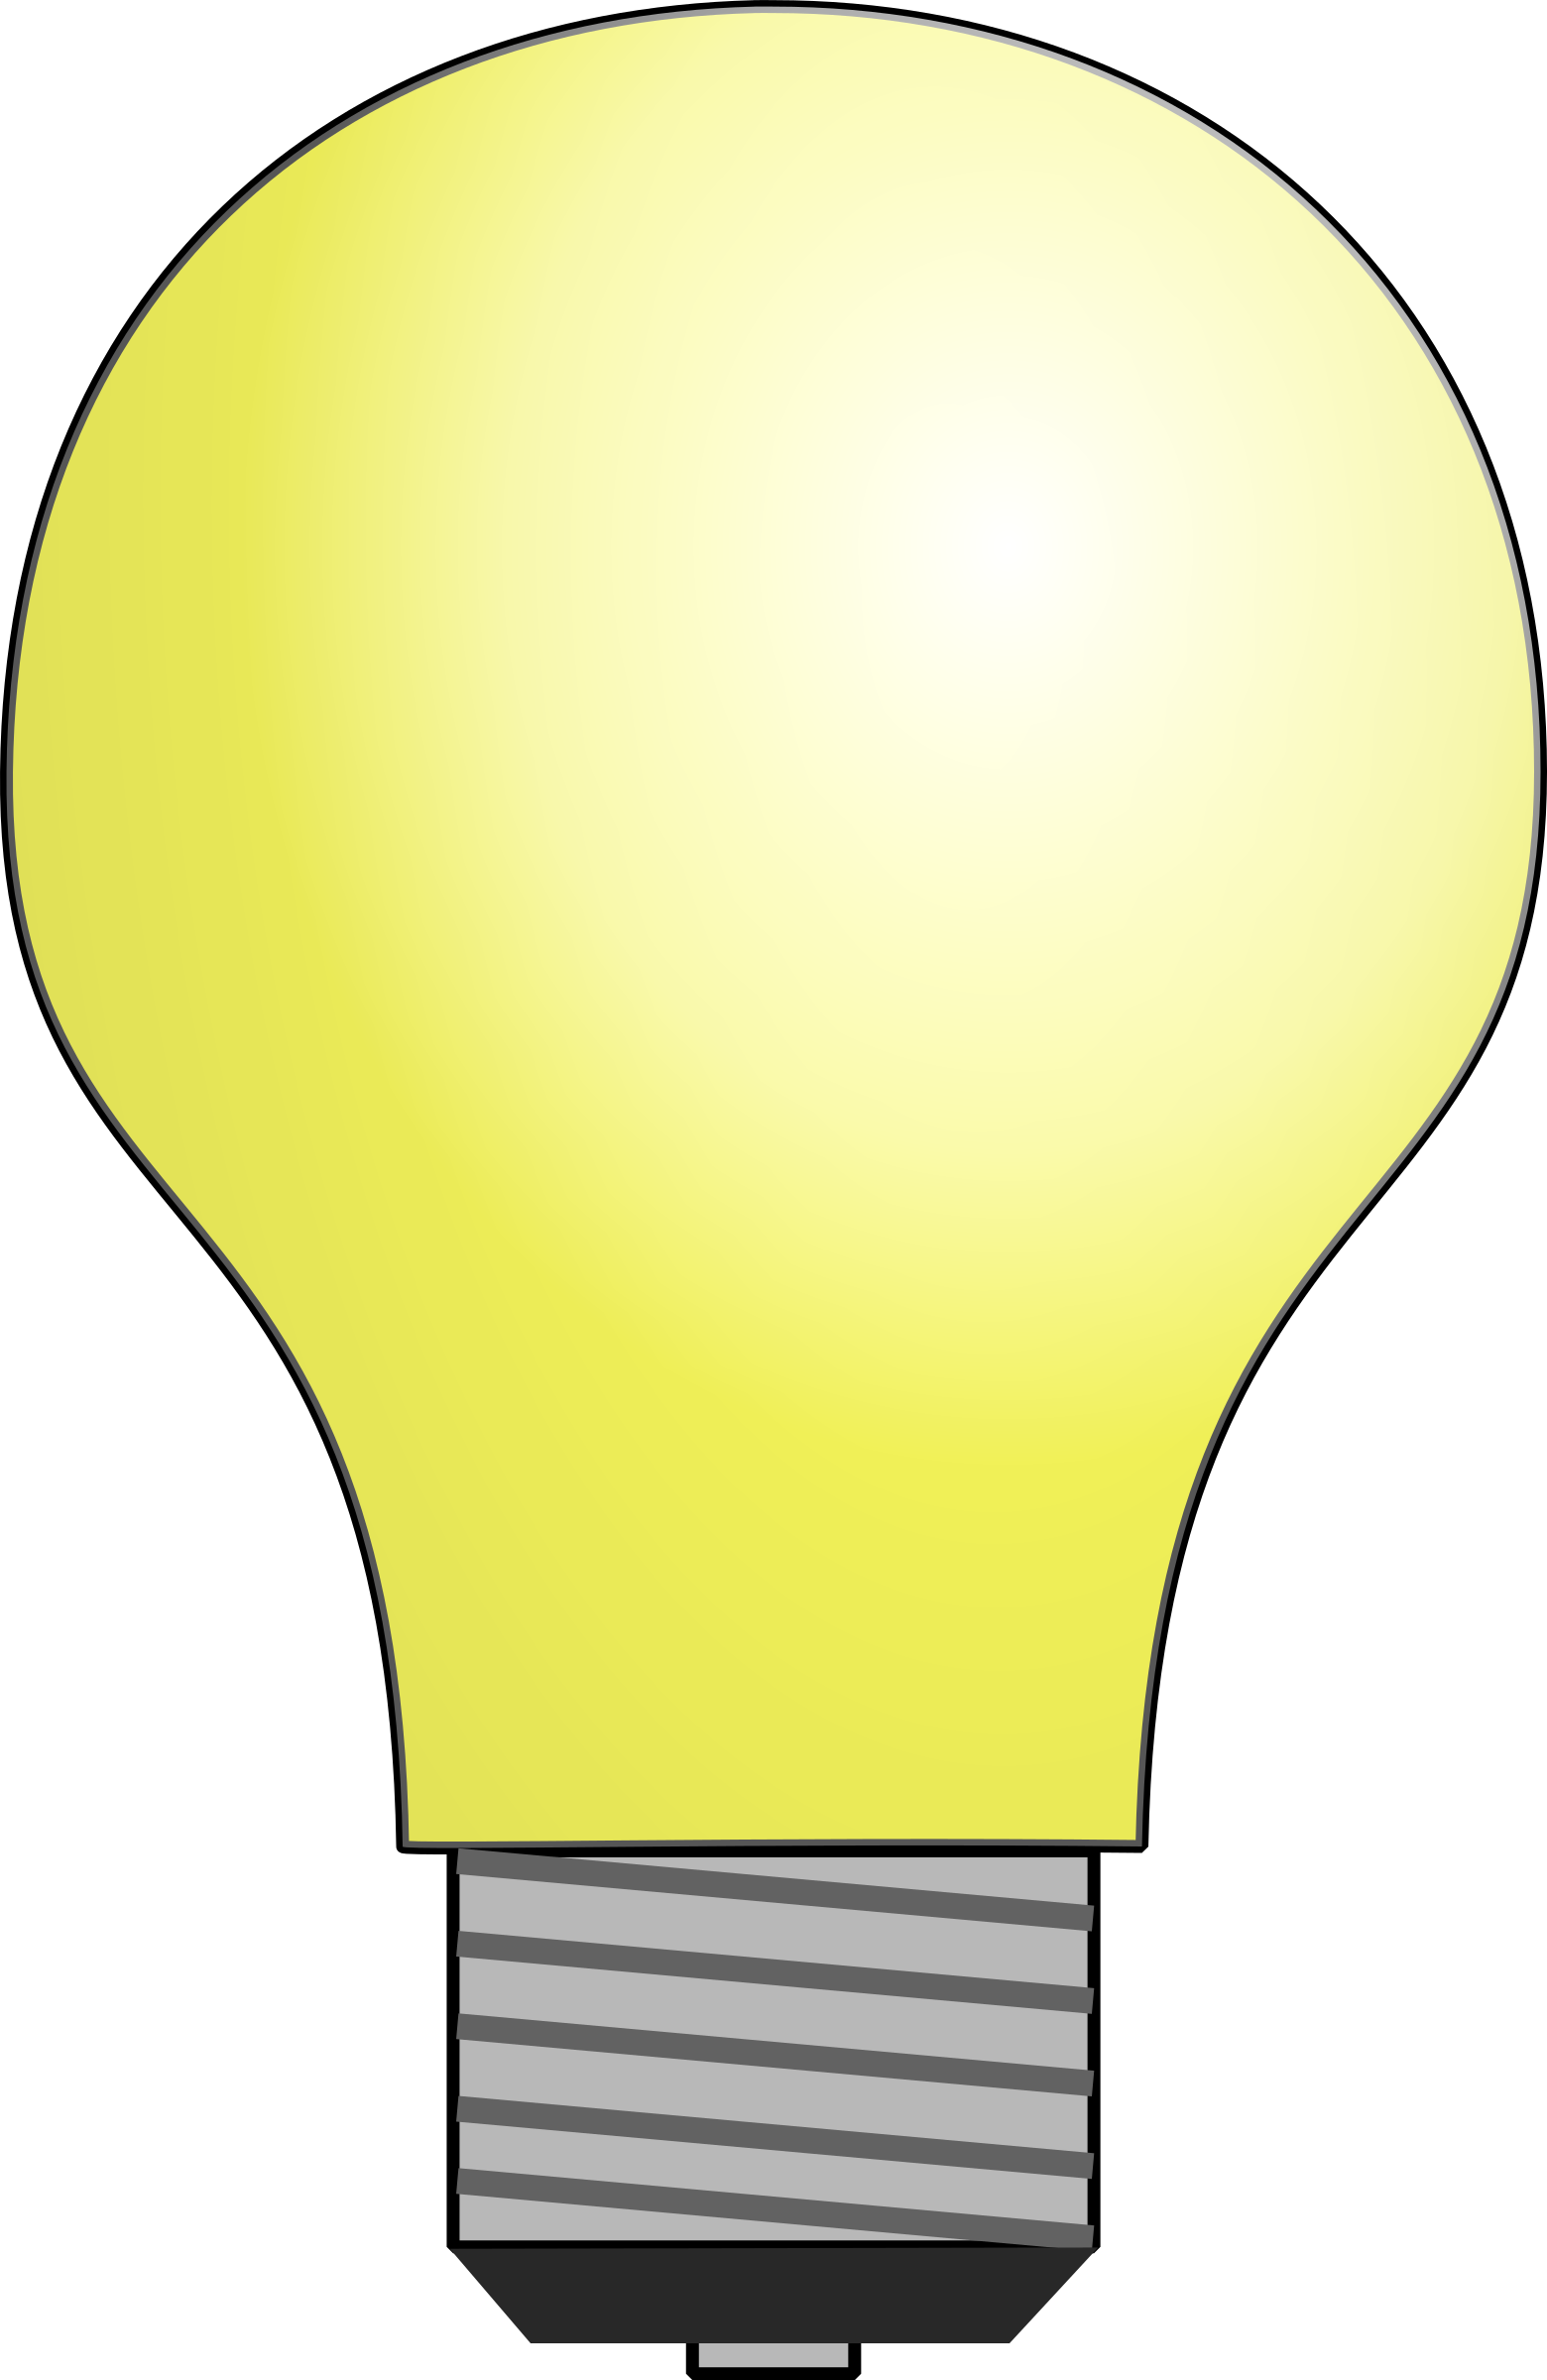 Lightbulb clipart light globe. Bulb big image png